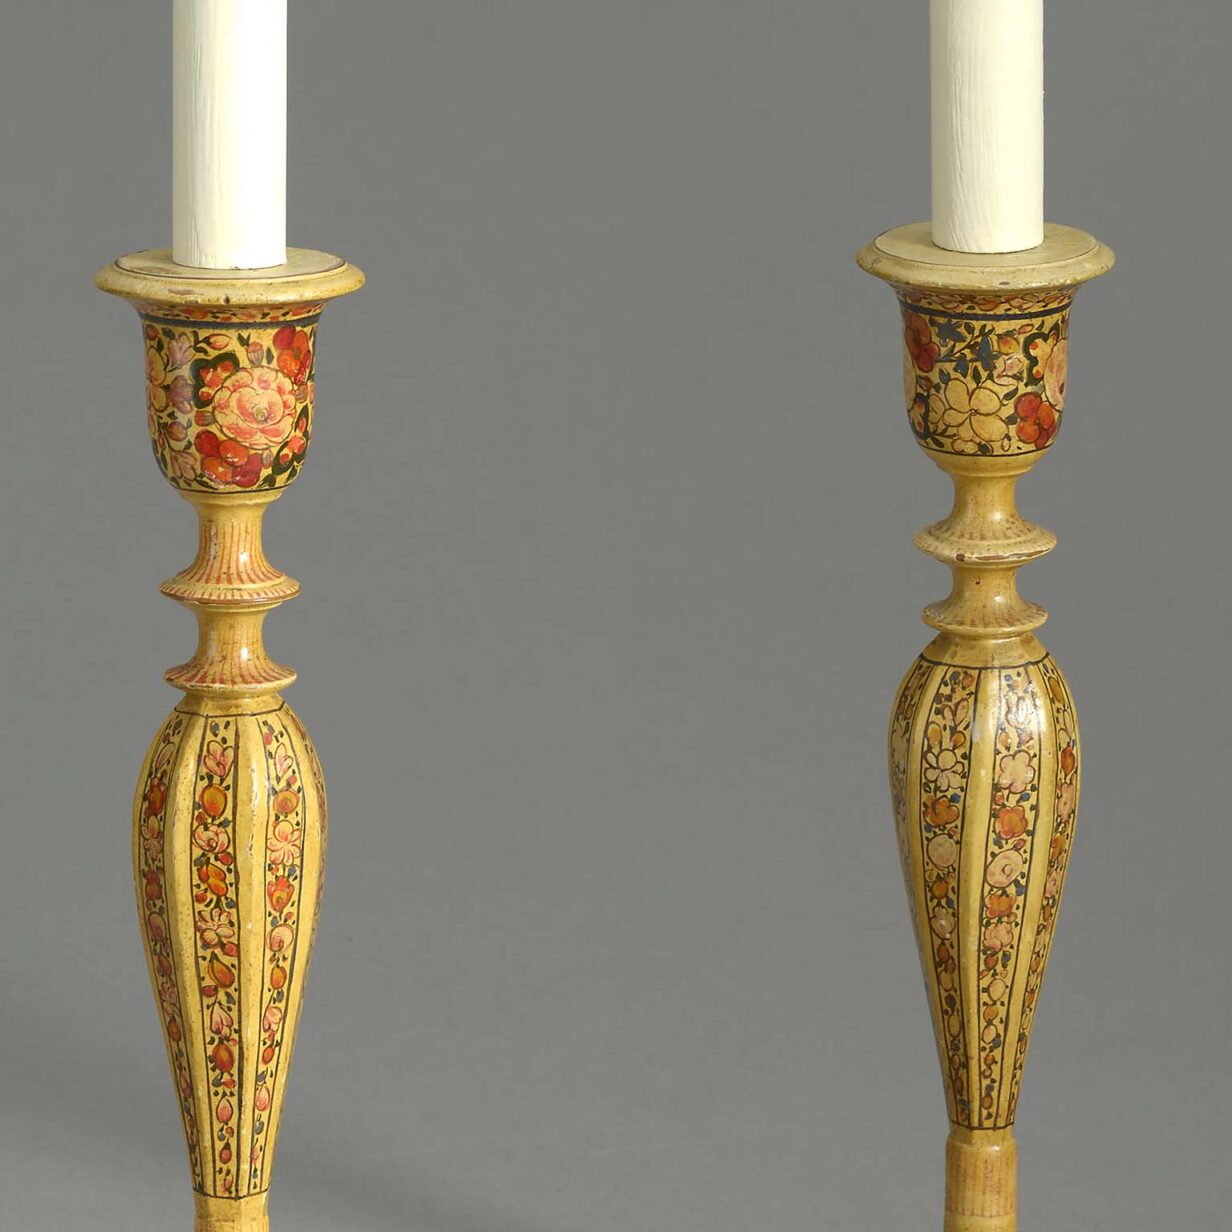 Pair of kashmiri lacquer lamps